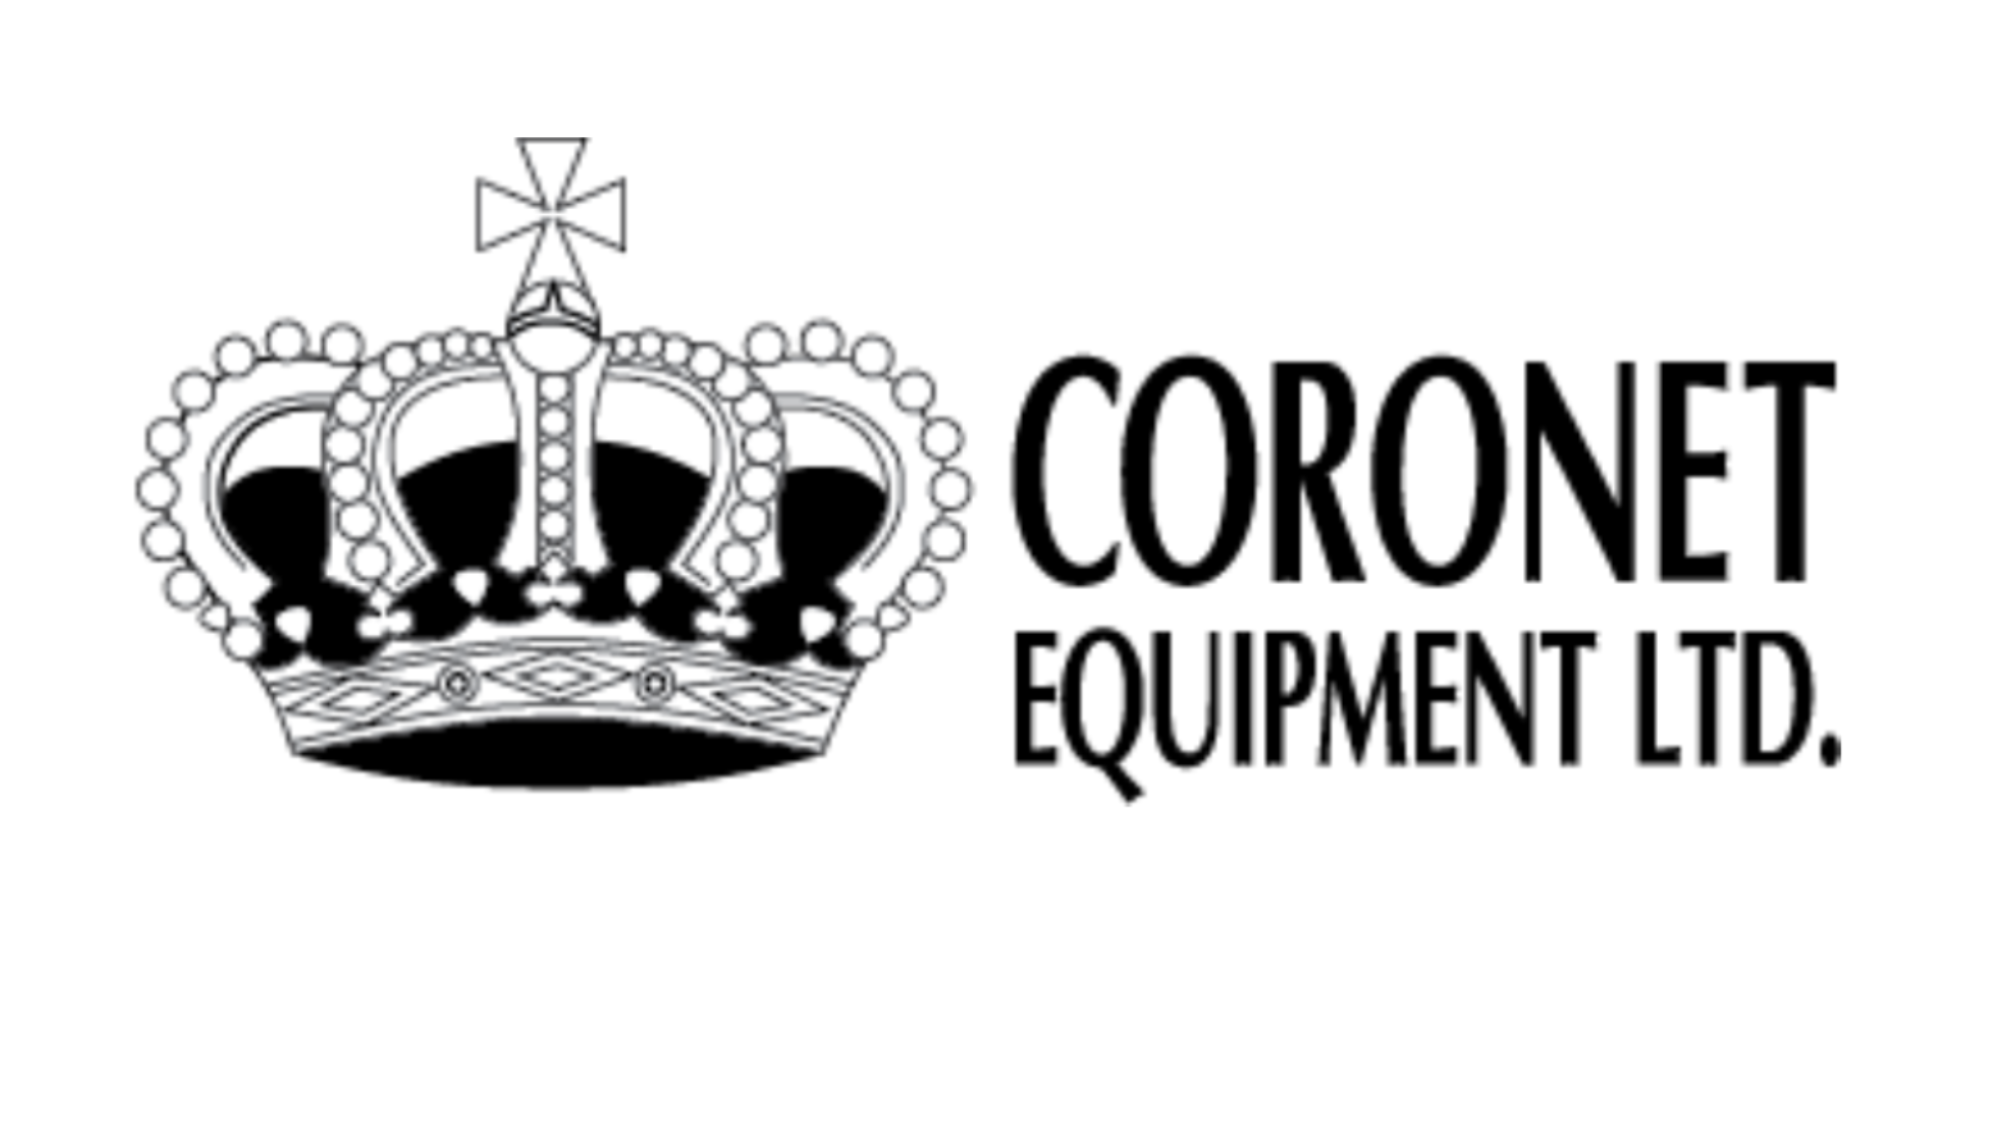 Coronet Equipment Ltd logo